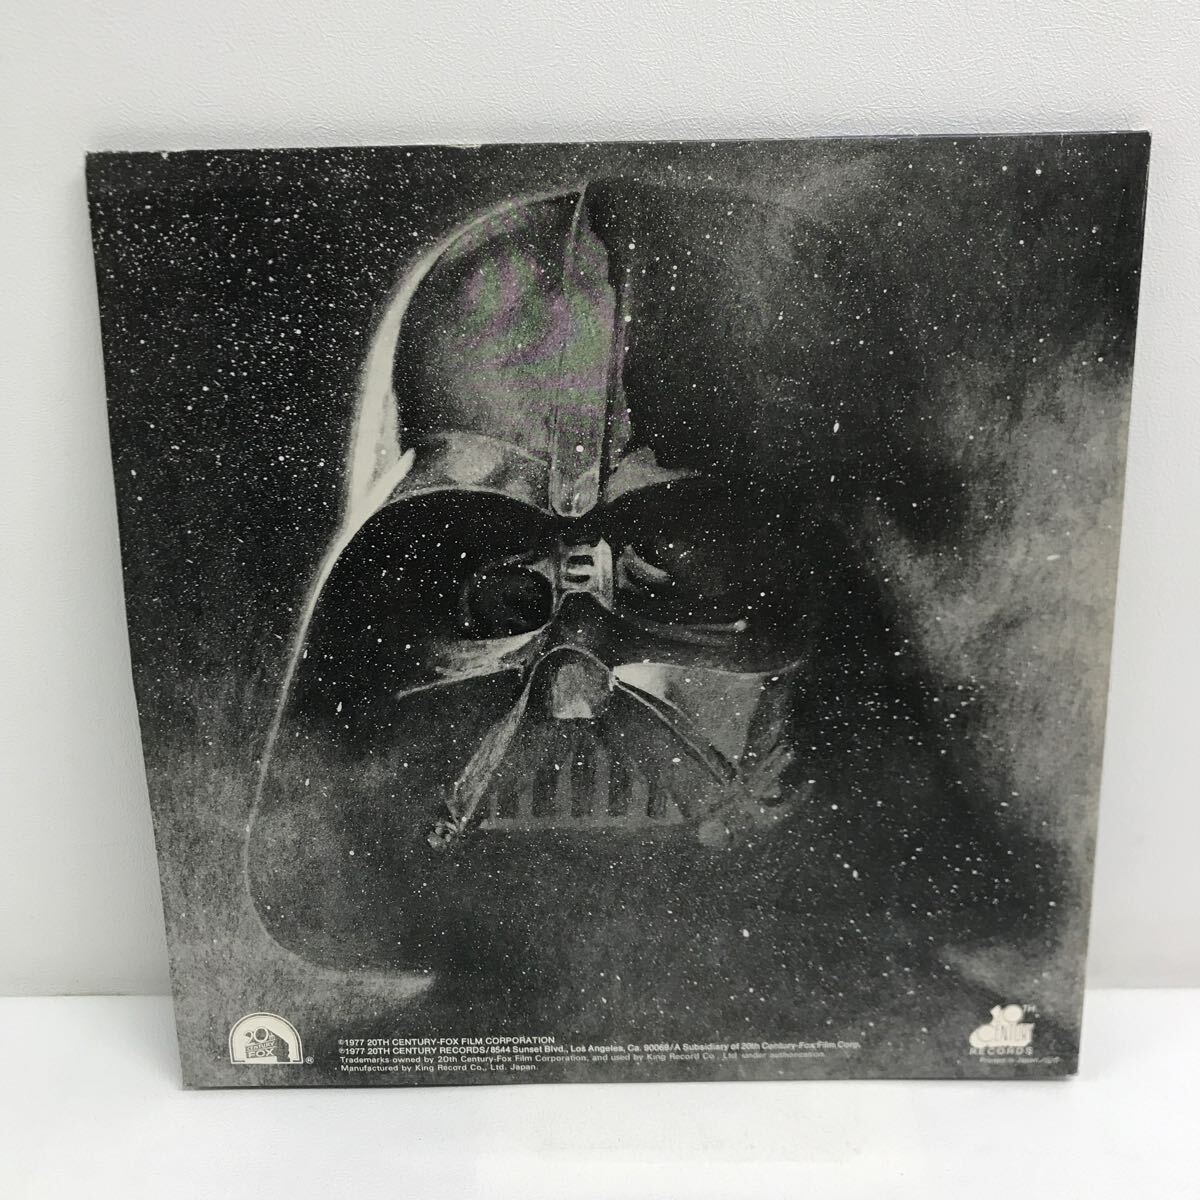 I0423A3 STAR WARS スター・ウォーズ オリジナル・サウンドトラック LP レコード 2枚組 帯付き 音楽 サントラ盤 FMW-37/8 キングレコードの画像2